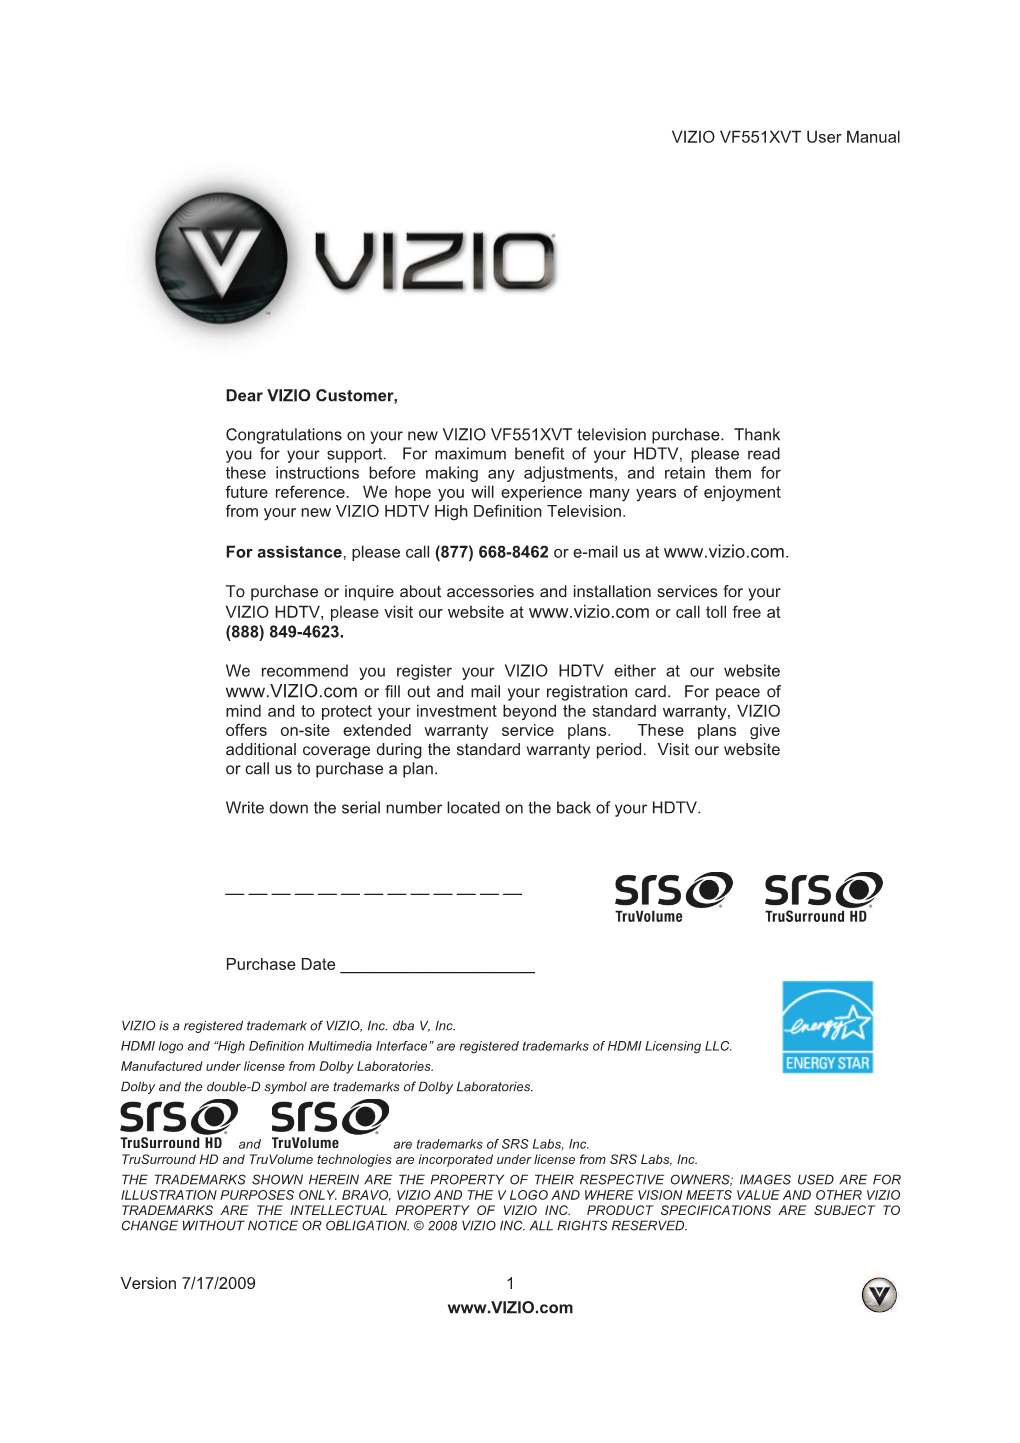 VIZIO VF551XVT User Manual Version 7/17/2009 1